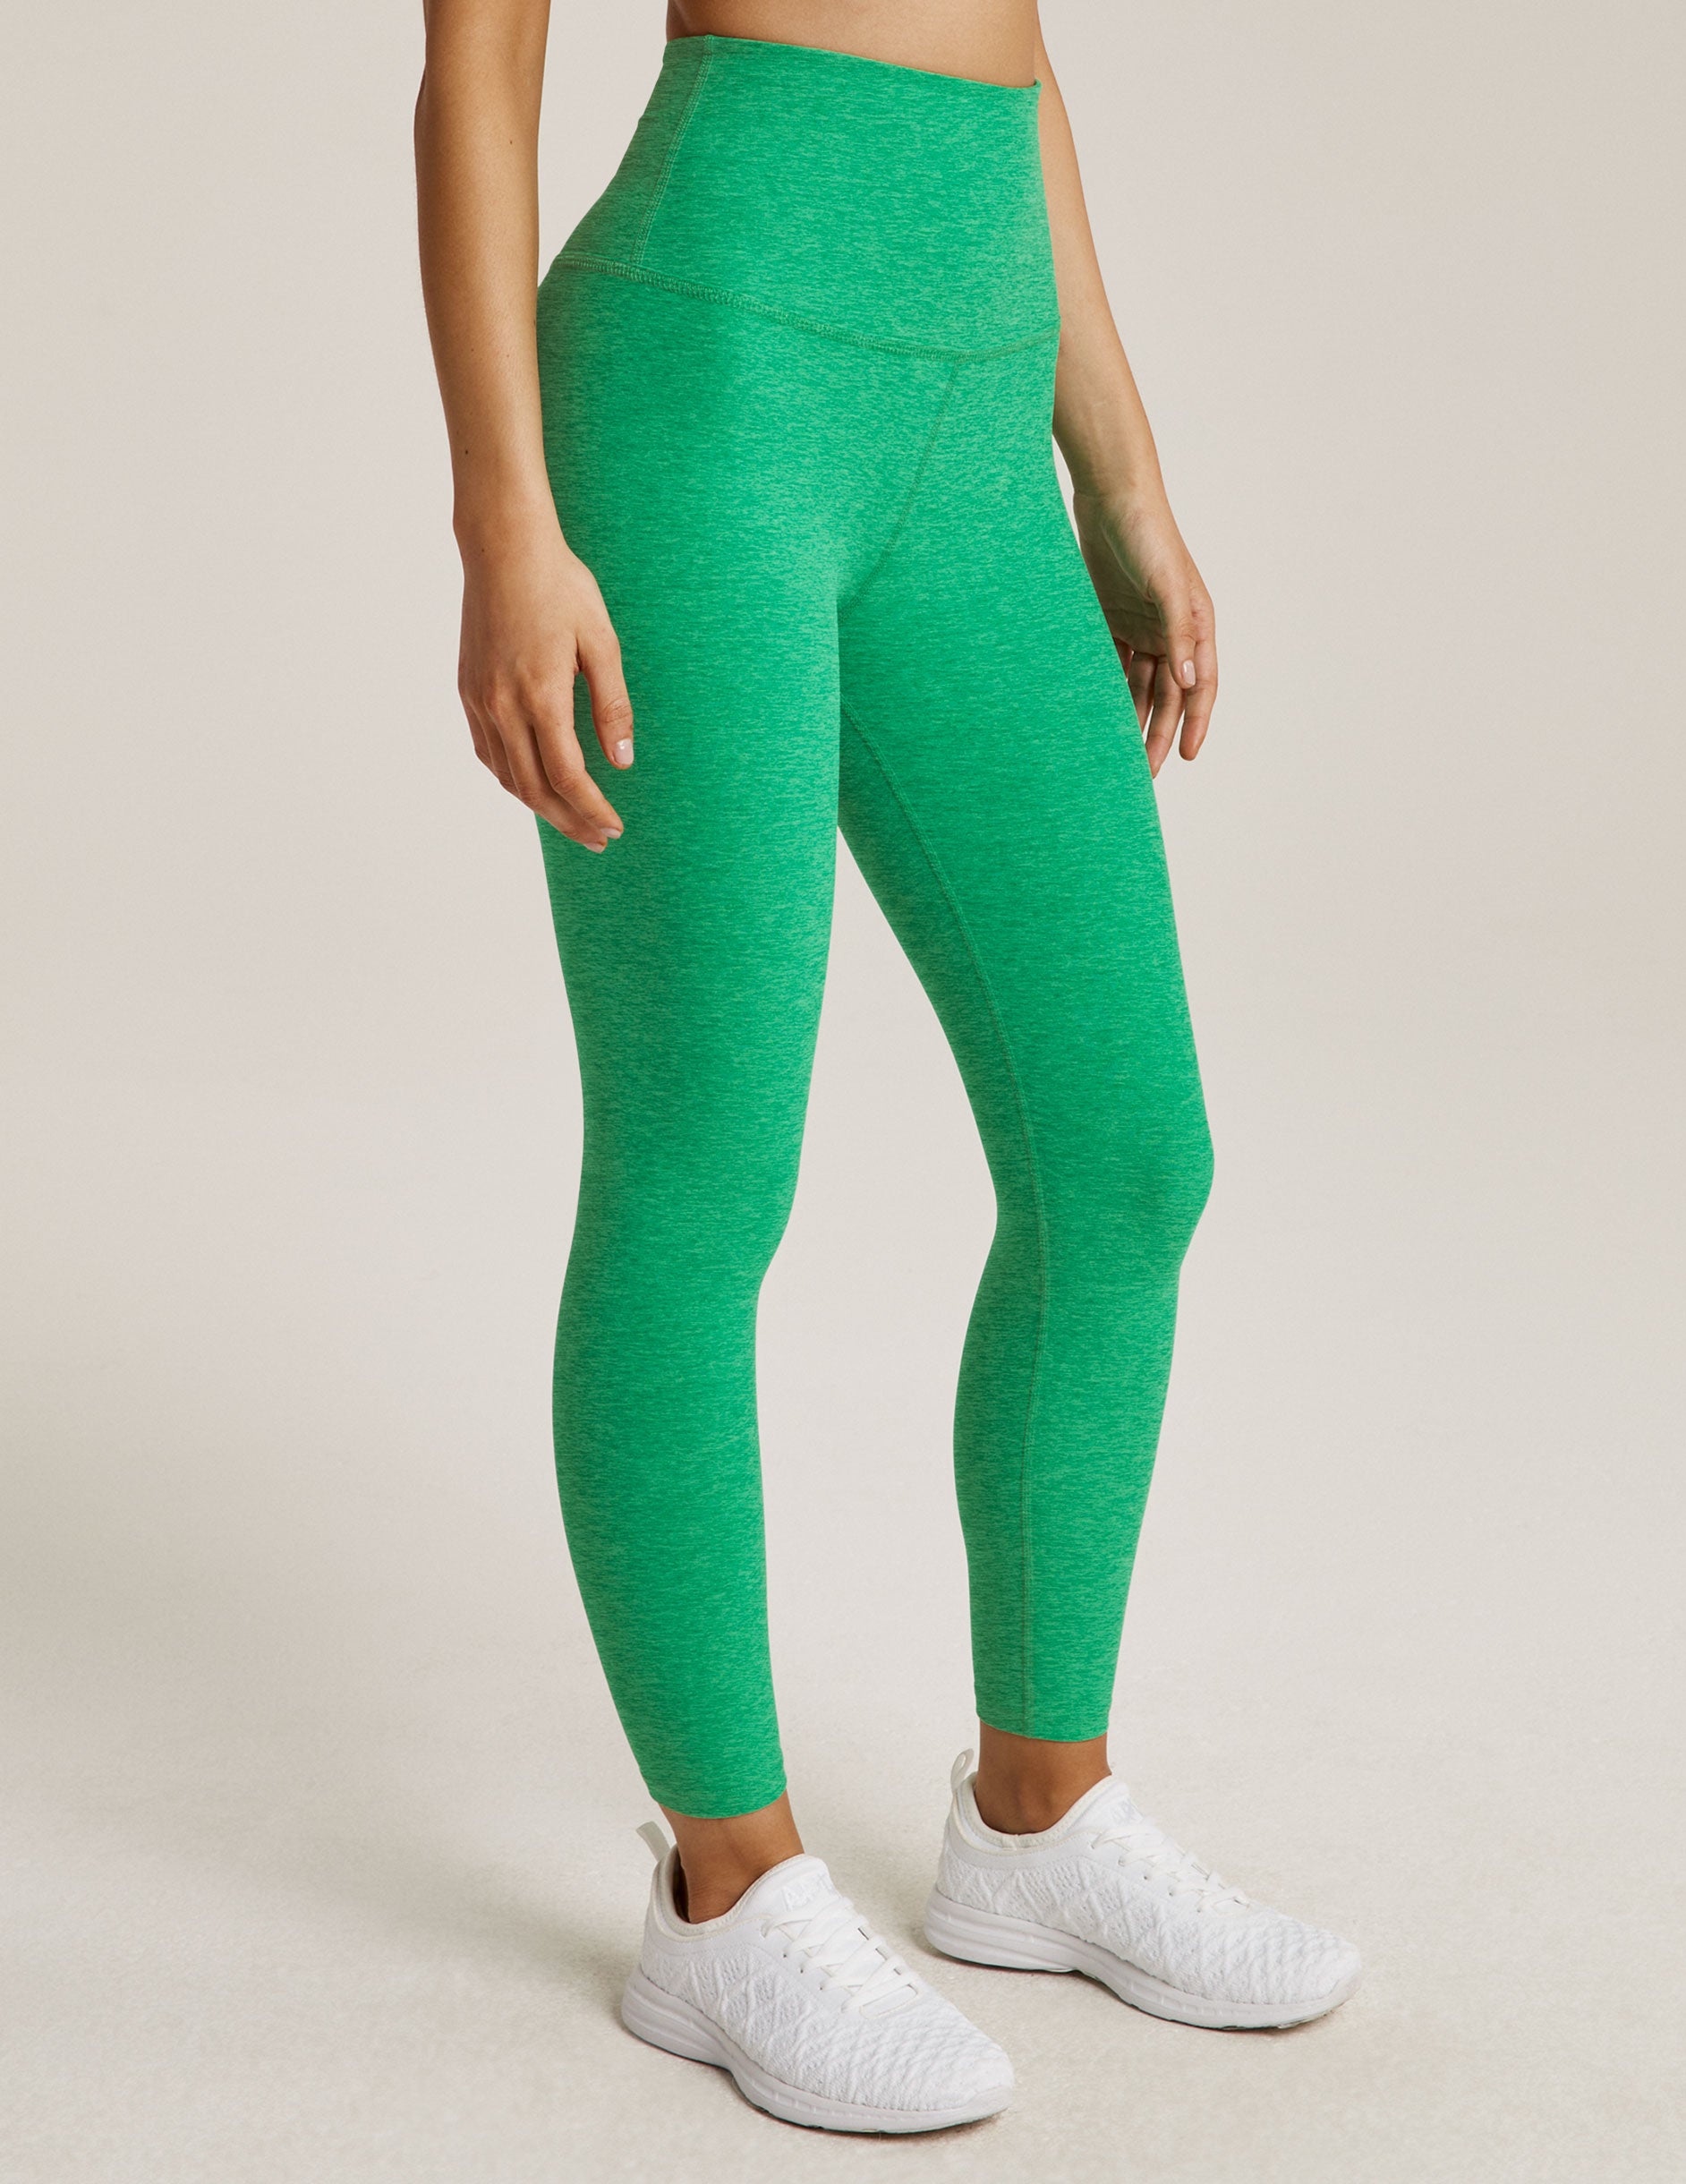 Beyond Yoga Green Leggings Size XL - 56% off